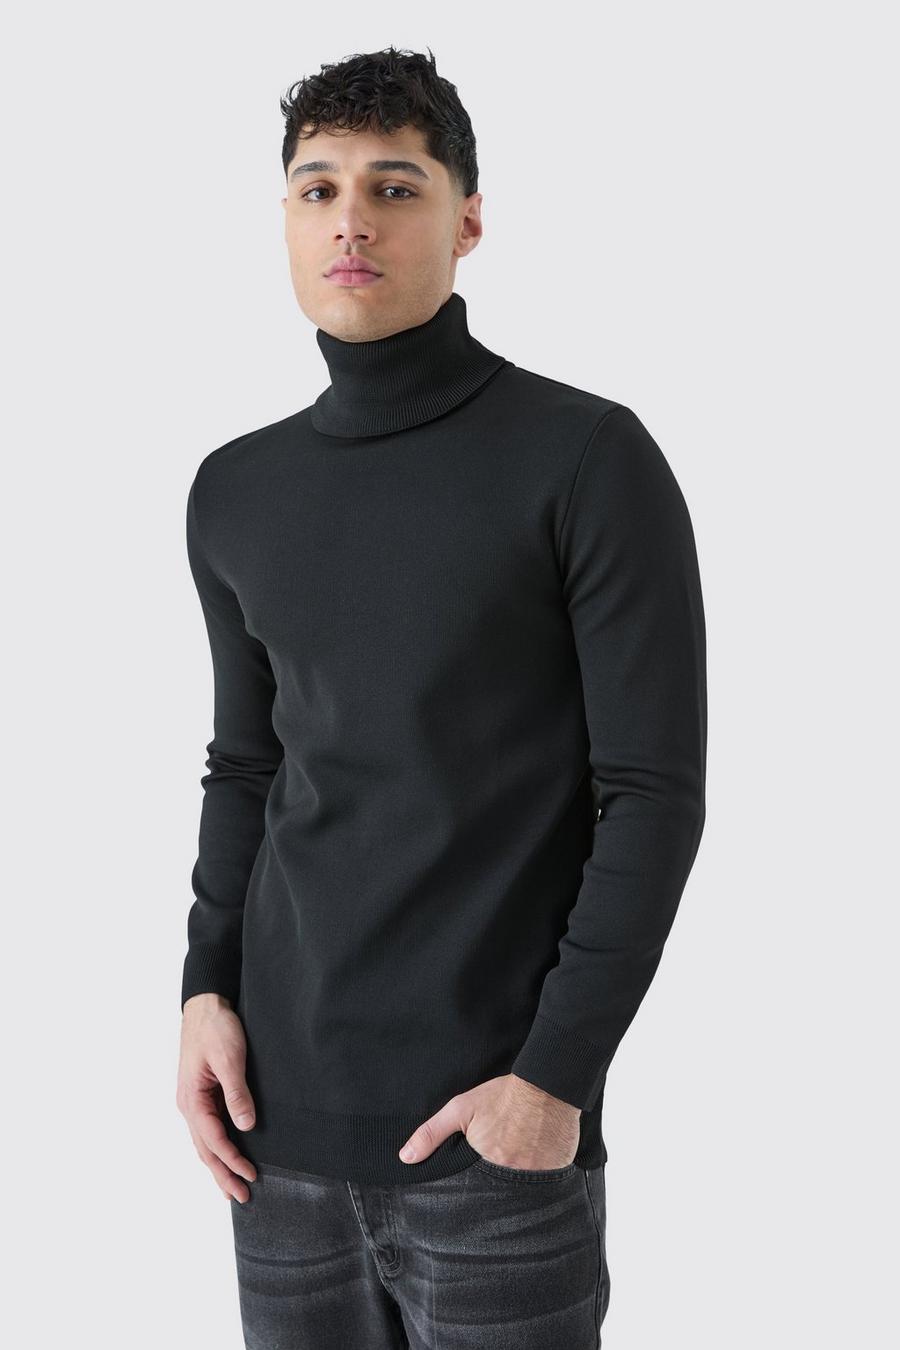 Black Muscle Turtleneck Sweater